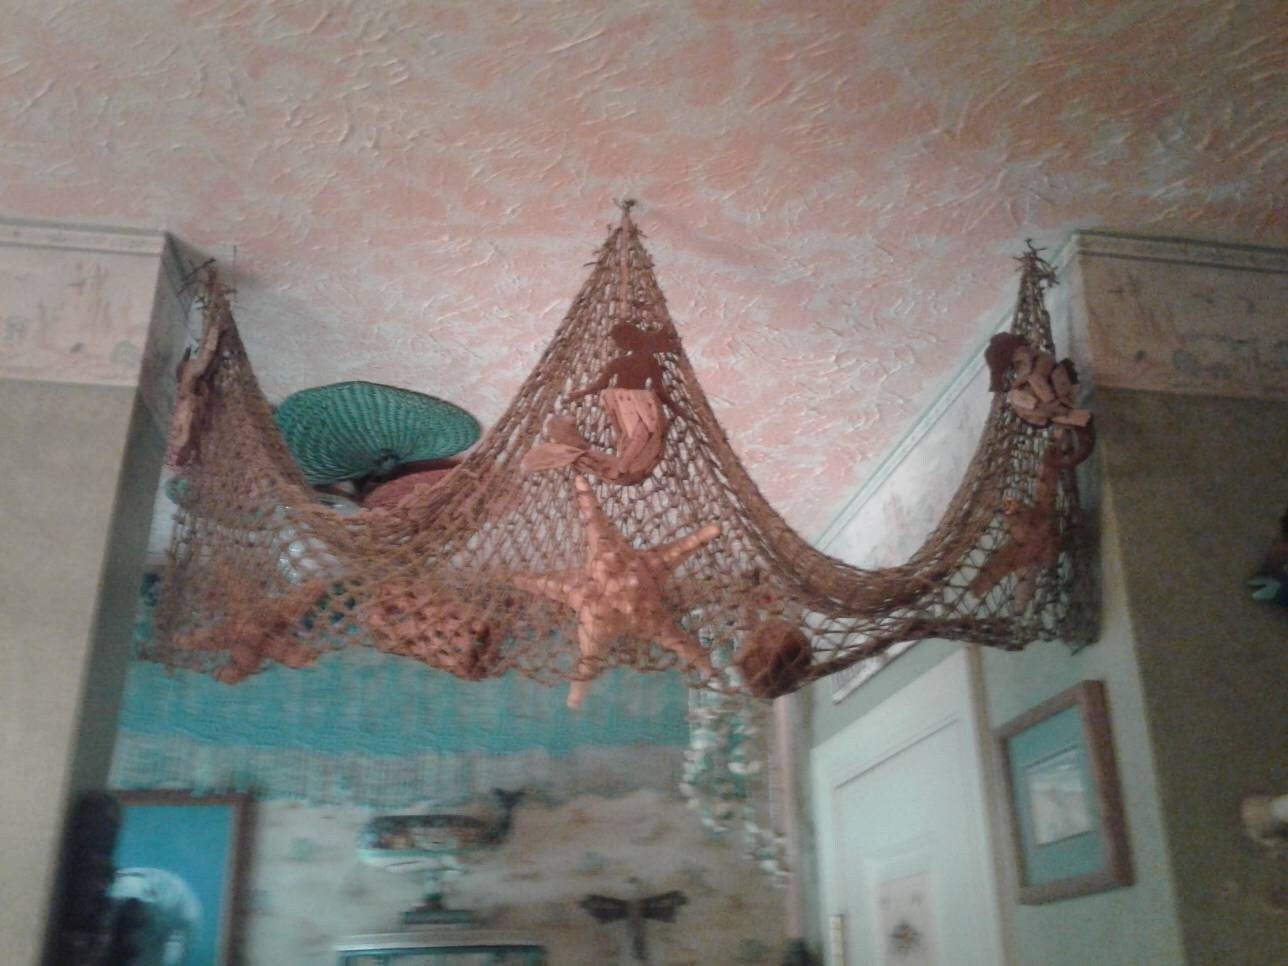 Fish net on ceiling  Fish net decor, Fishing net wall decor, Beach  inspired decor